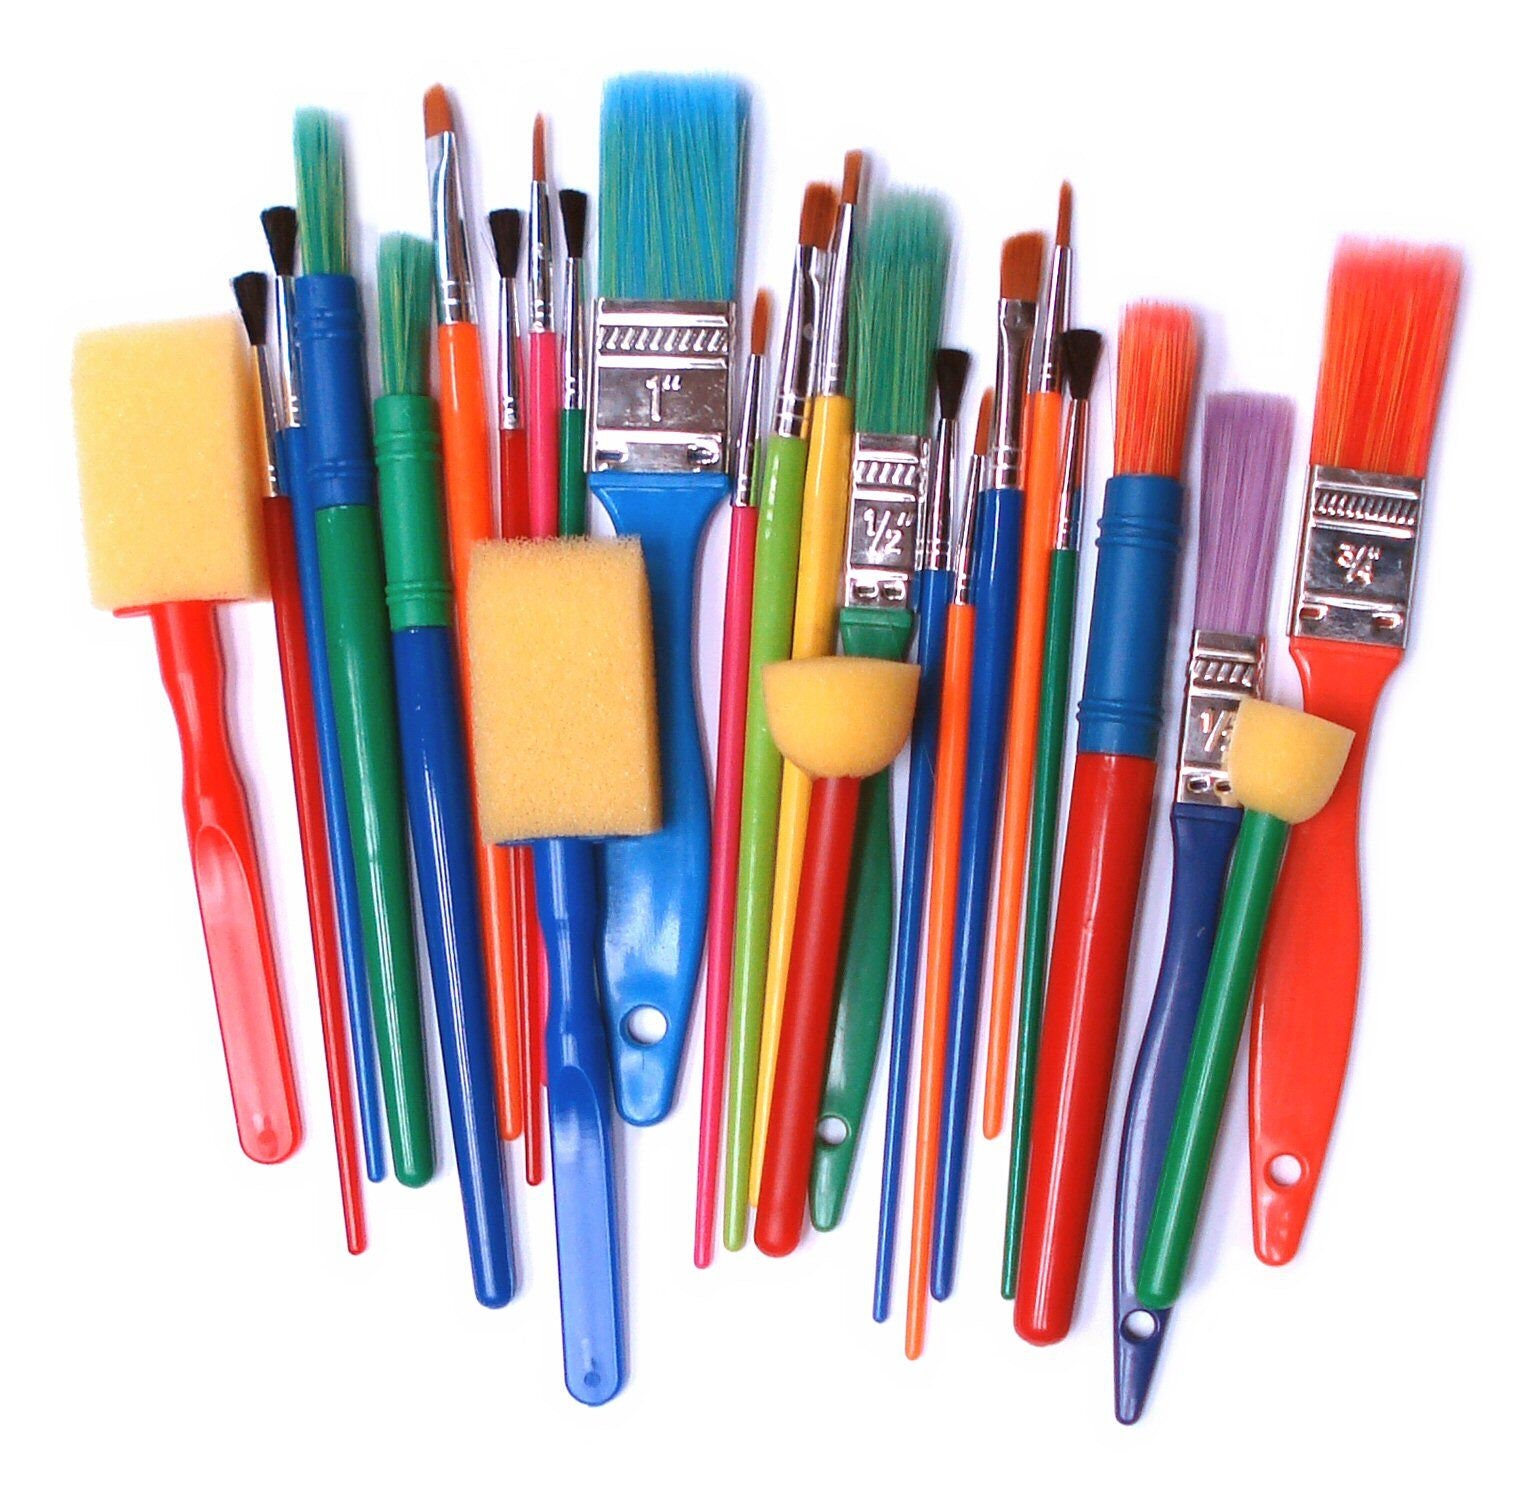 Major Brush Art Craft, Kid's Paint Brushes Foam Dabbers Pack of 25